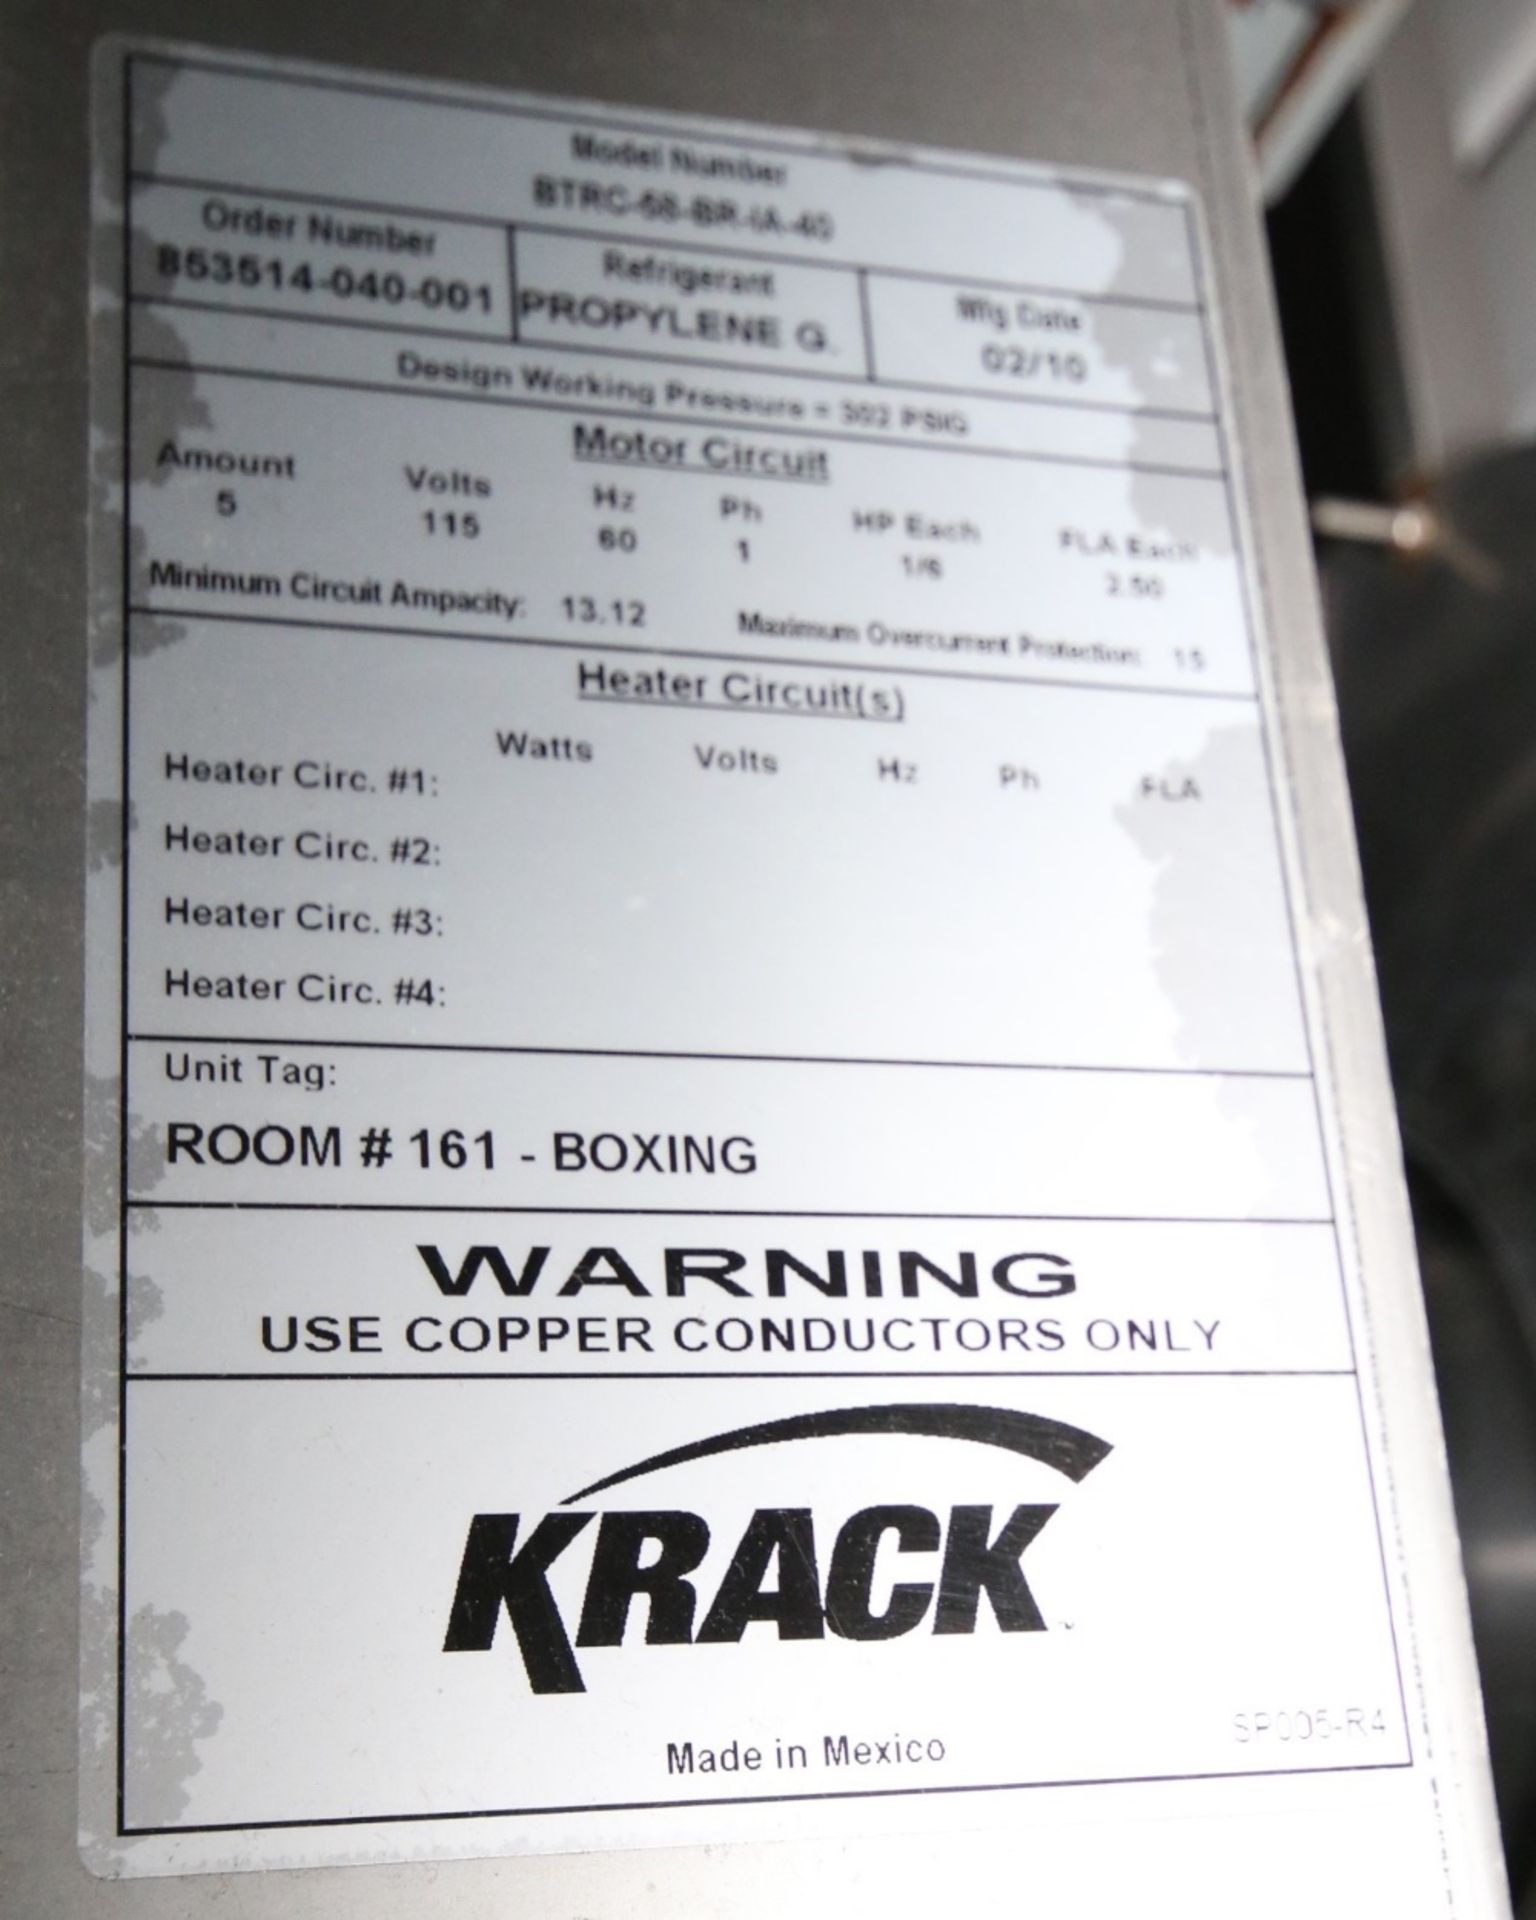 2010 Krack 5-Fan Low Profile Propylene Glycol S/S Evaporator/Blowers, Model BTRC-58-BR-1A-40, - Image 2 of 6